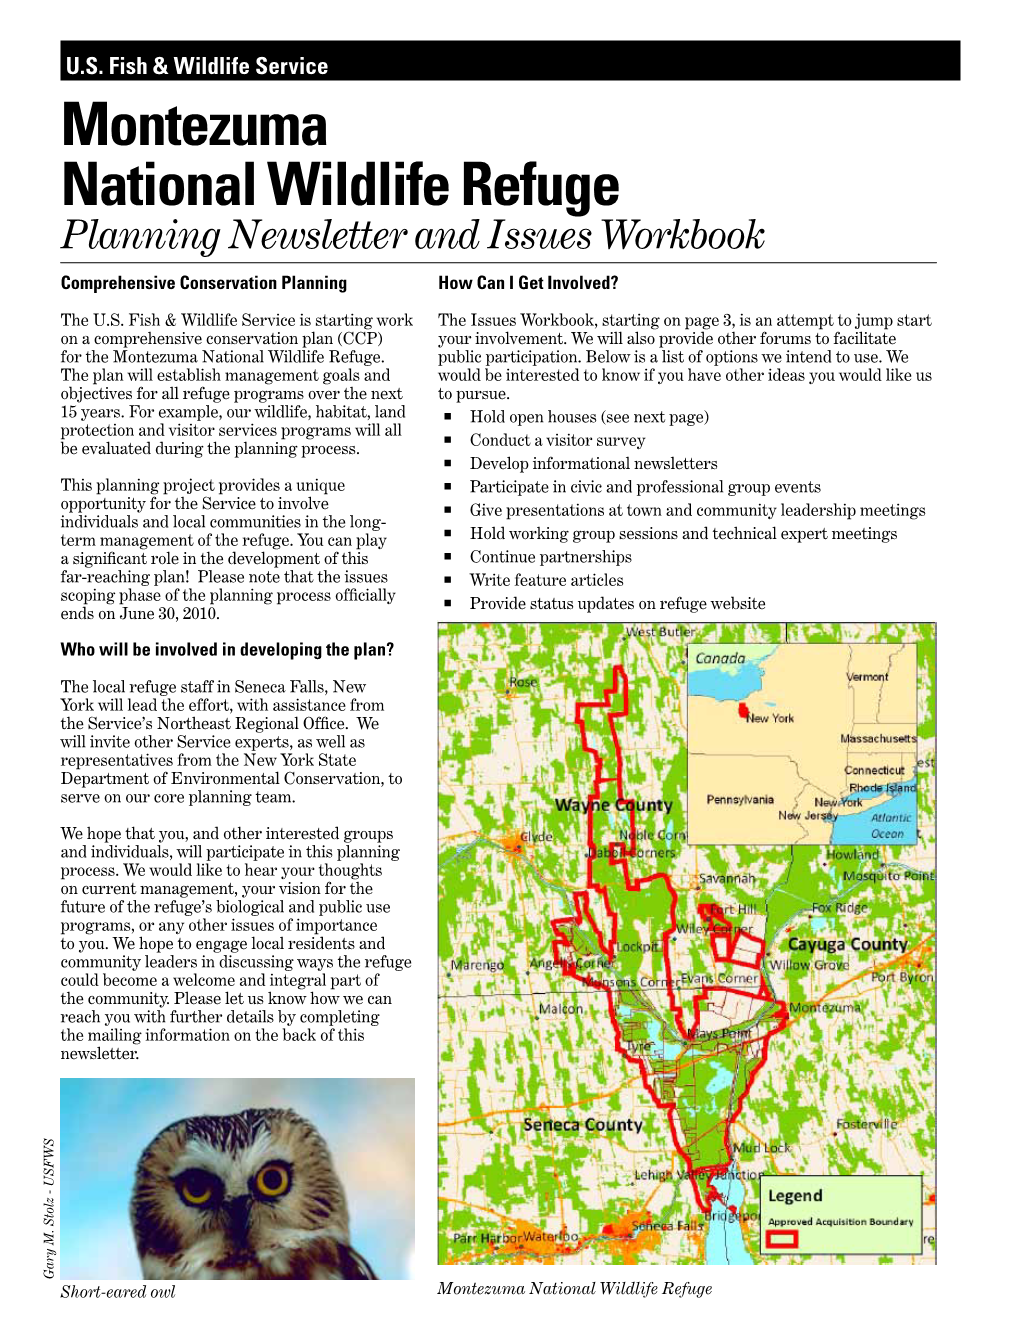 Montezuma National Wildlife Refuge Planning Newsletter and Issues Workbook Comprehensive Conservation Planning How Can I Get Involved?